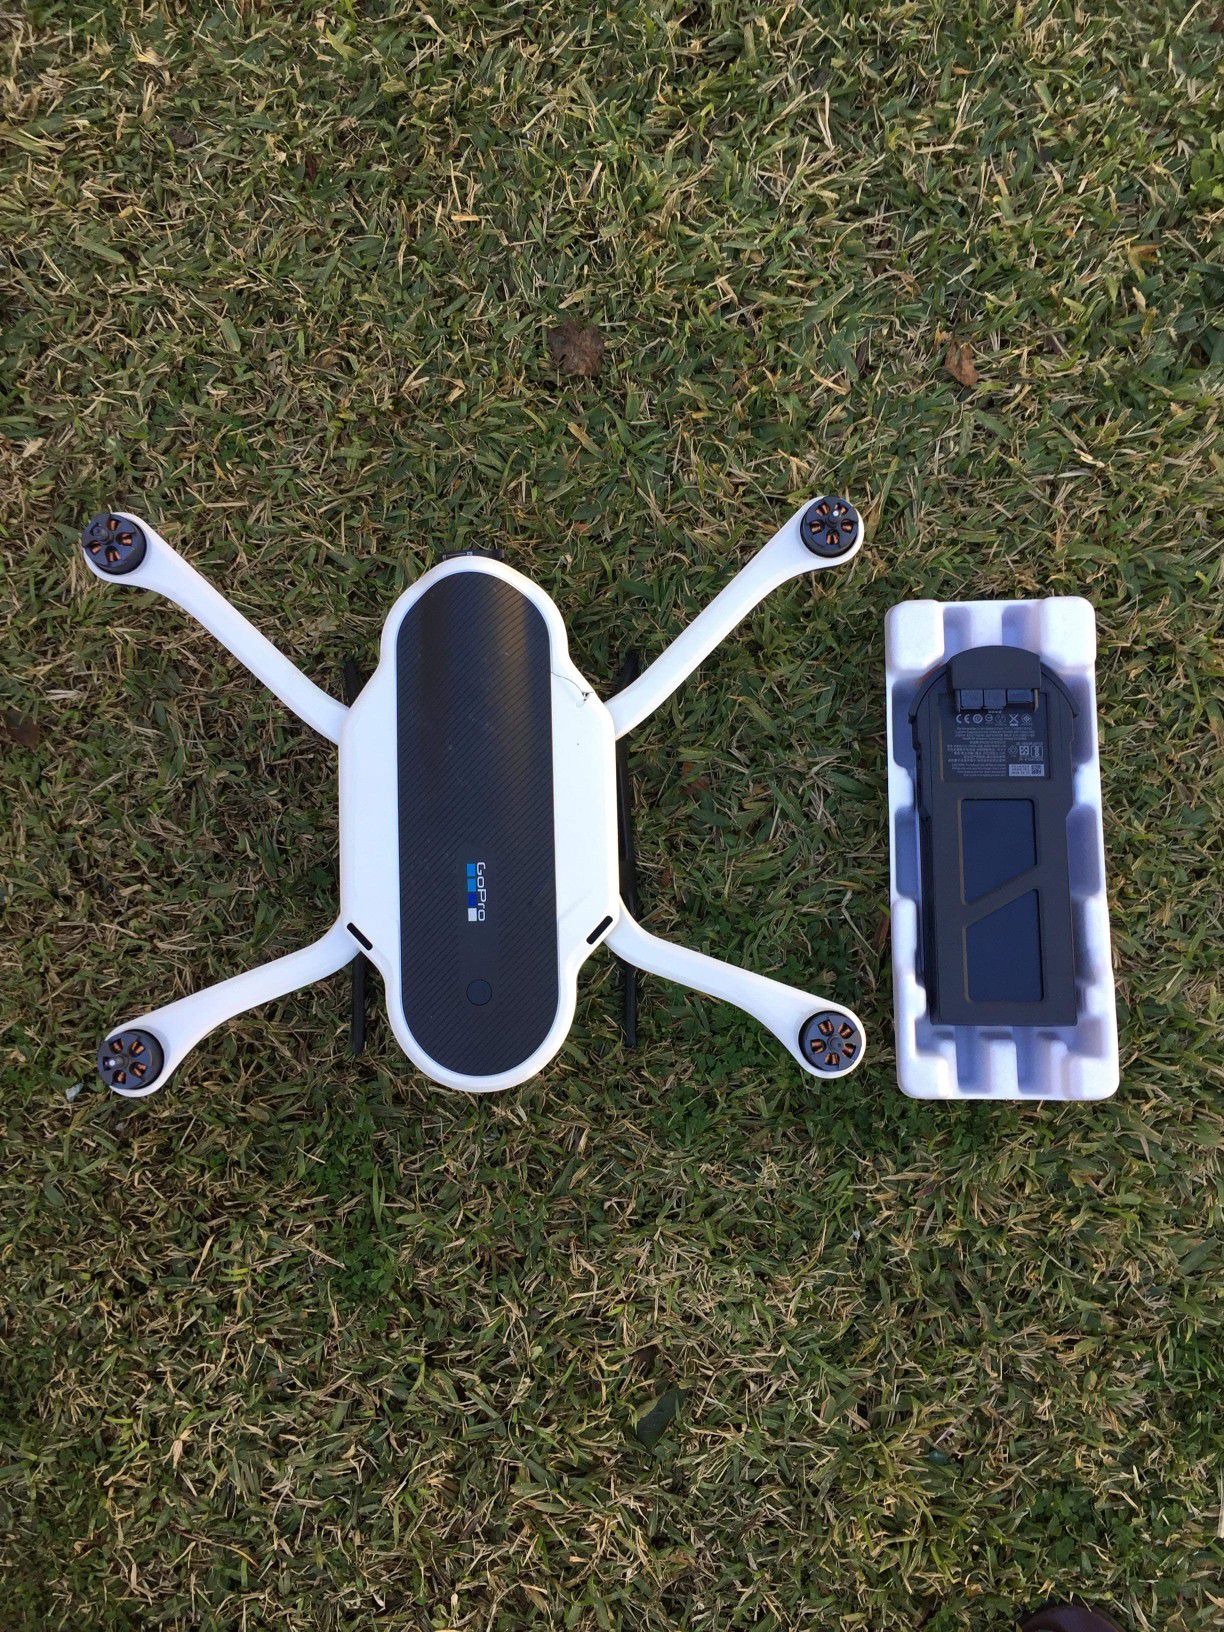 Karma drone [Aircraft]